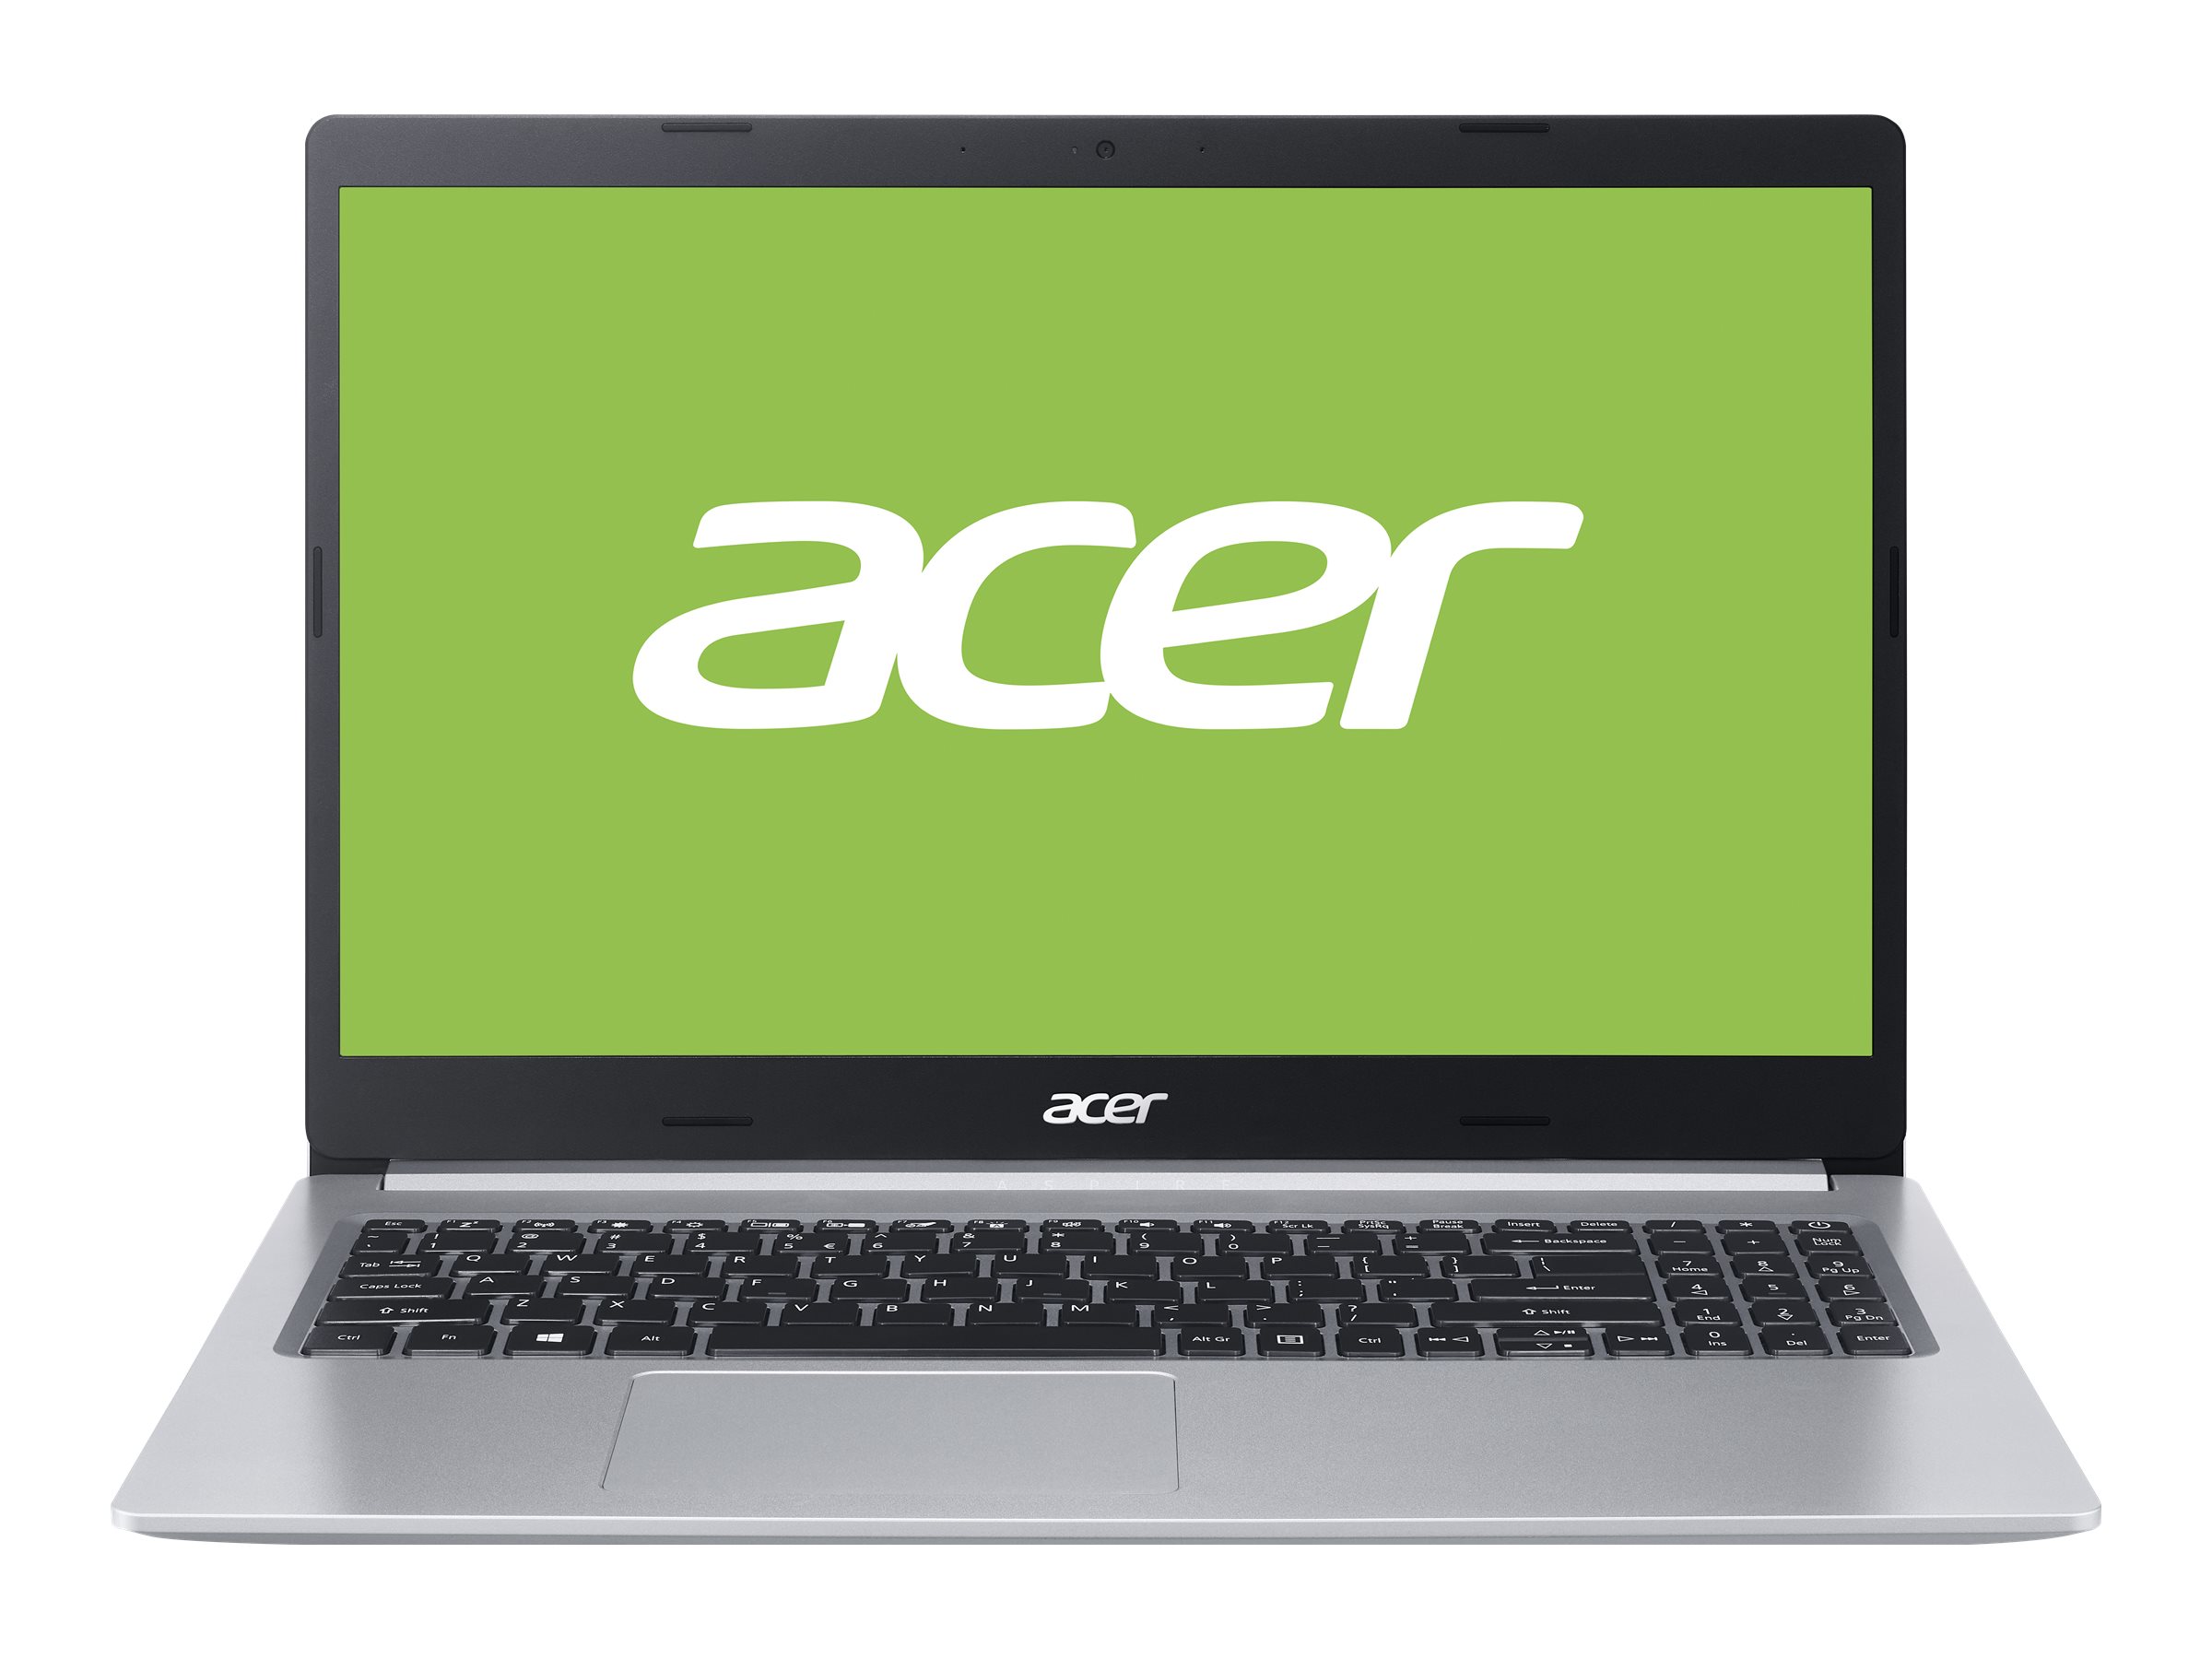 Acer Aspire 5 A515-54-37U3 - Intel Core i3 10110U / 2.1 GHz - Windows 10 Home 64-bit in S mode - UHD Graphics - 4 GB RAM - 128 GB SSD NVMe - 15.6" IPS 1920 x 1080 (Full HD) - Wi-Fi 5 - pure silver - kbd: US Intl - image 2 of 7